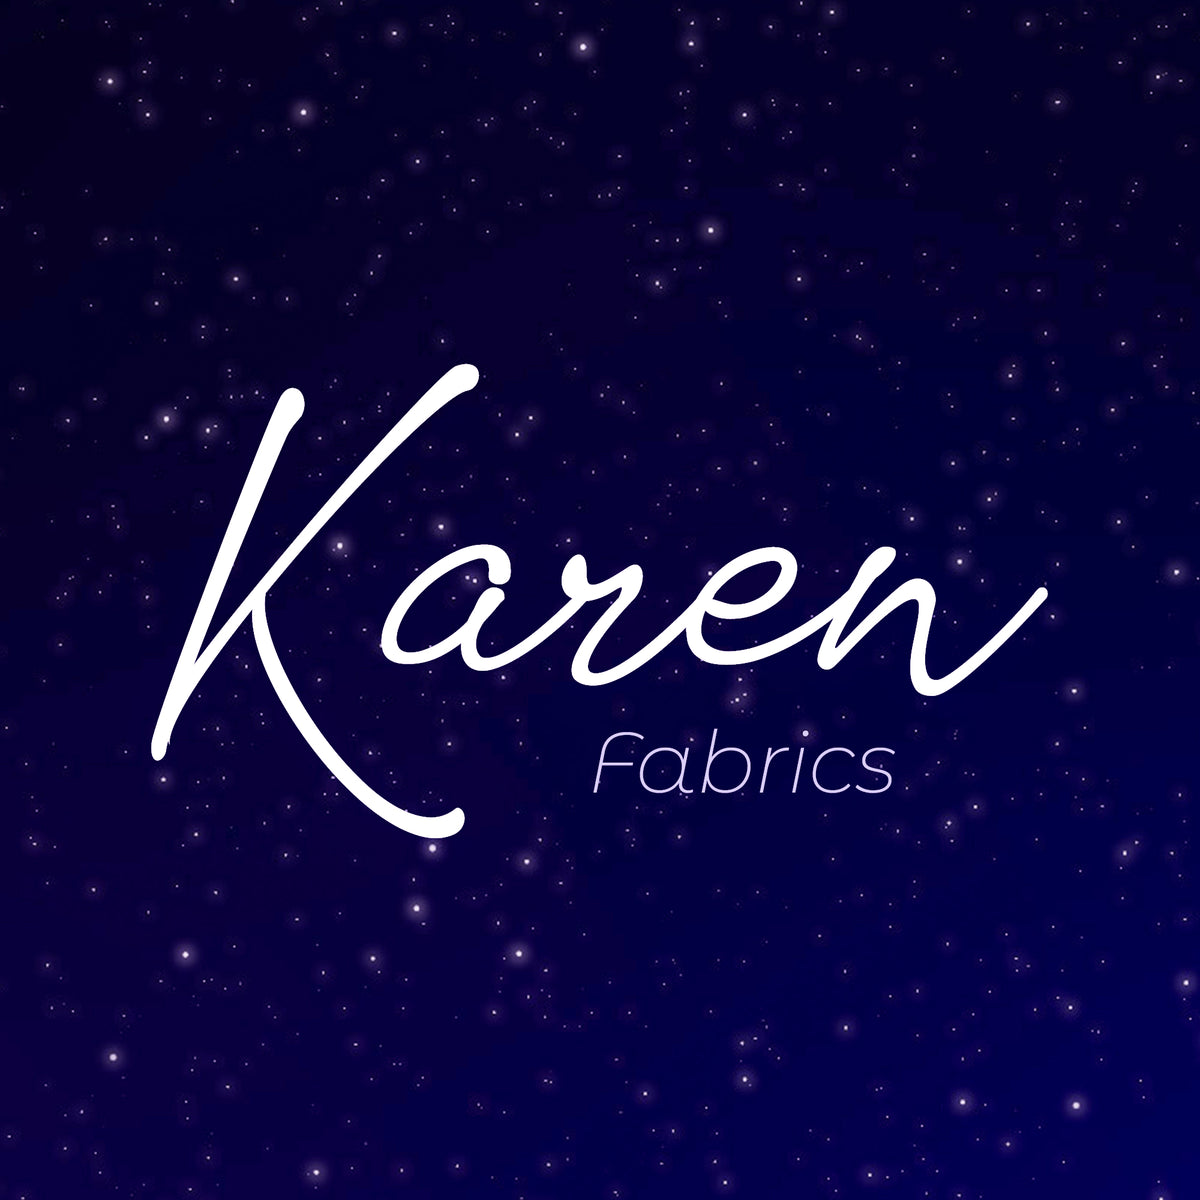 karenfabrics.net